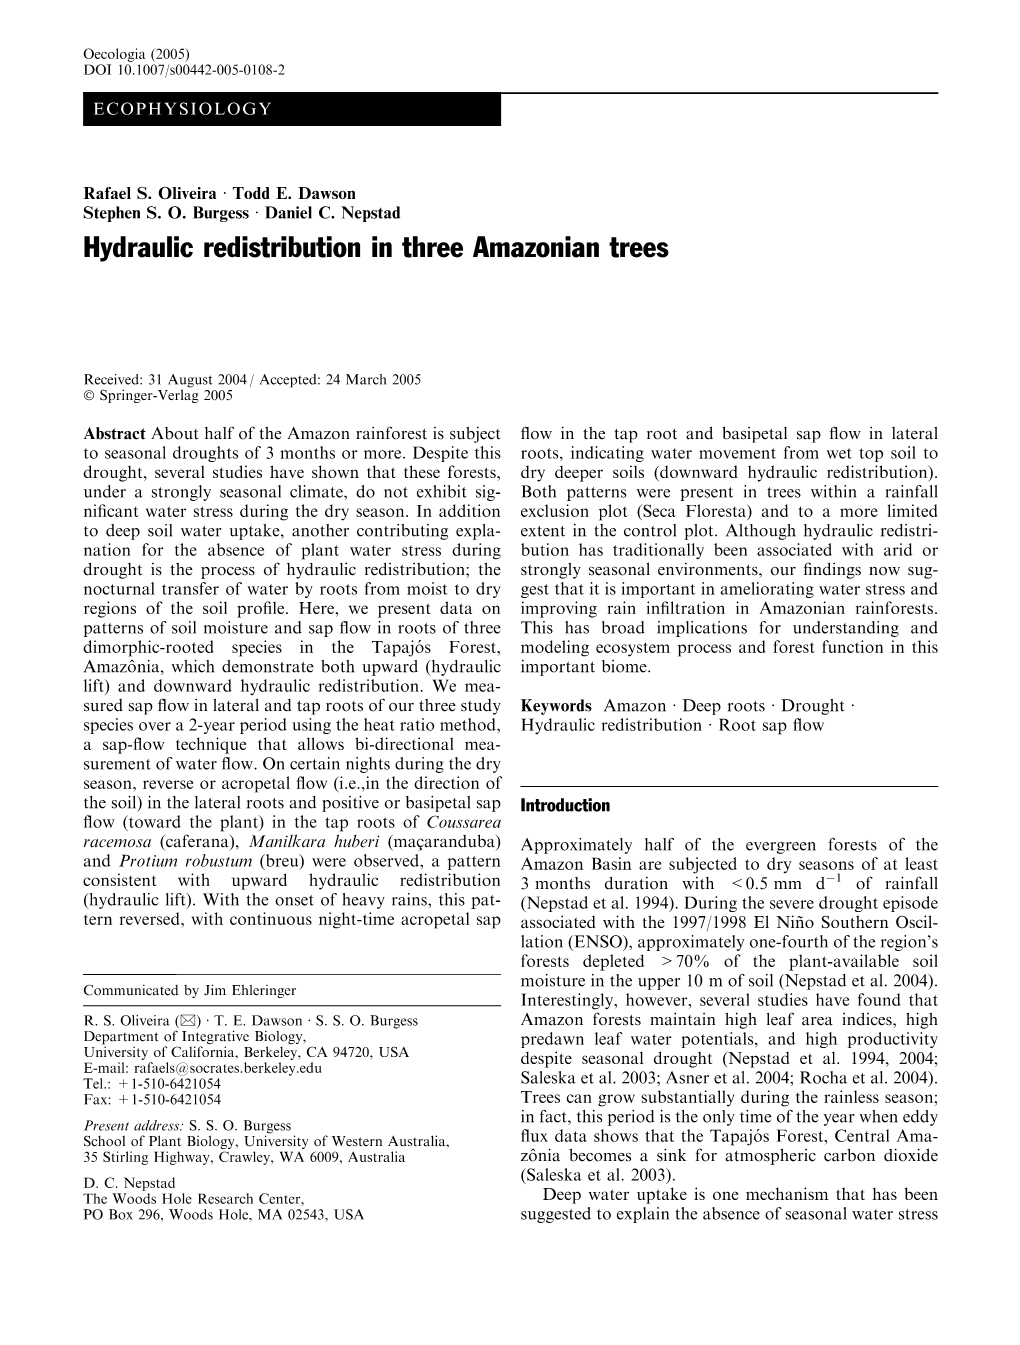 Hydraulic Redistribution in Three Amazonian Trees